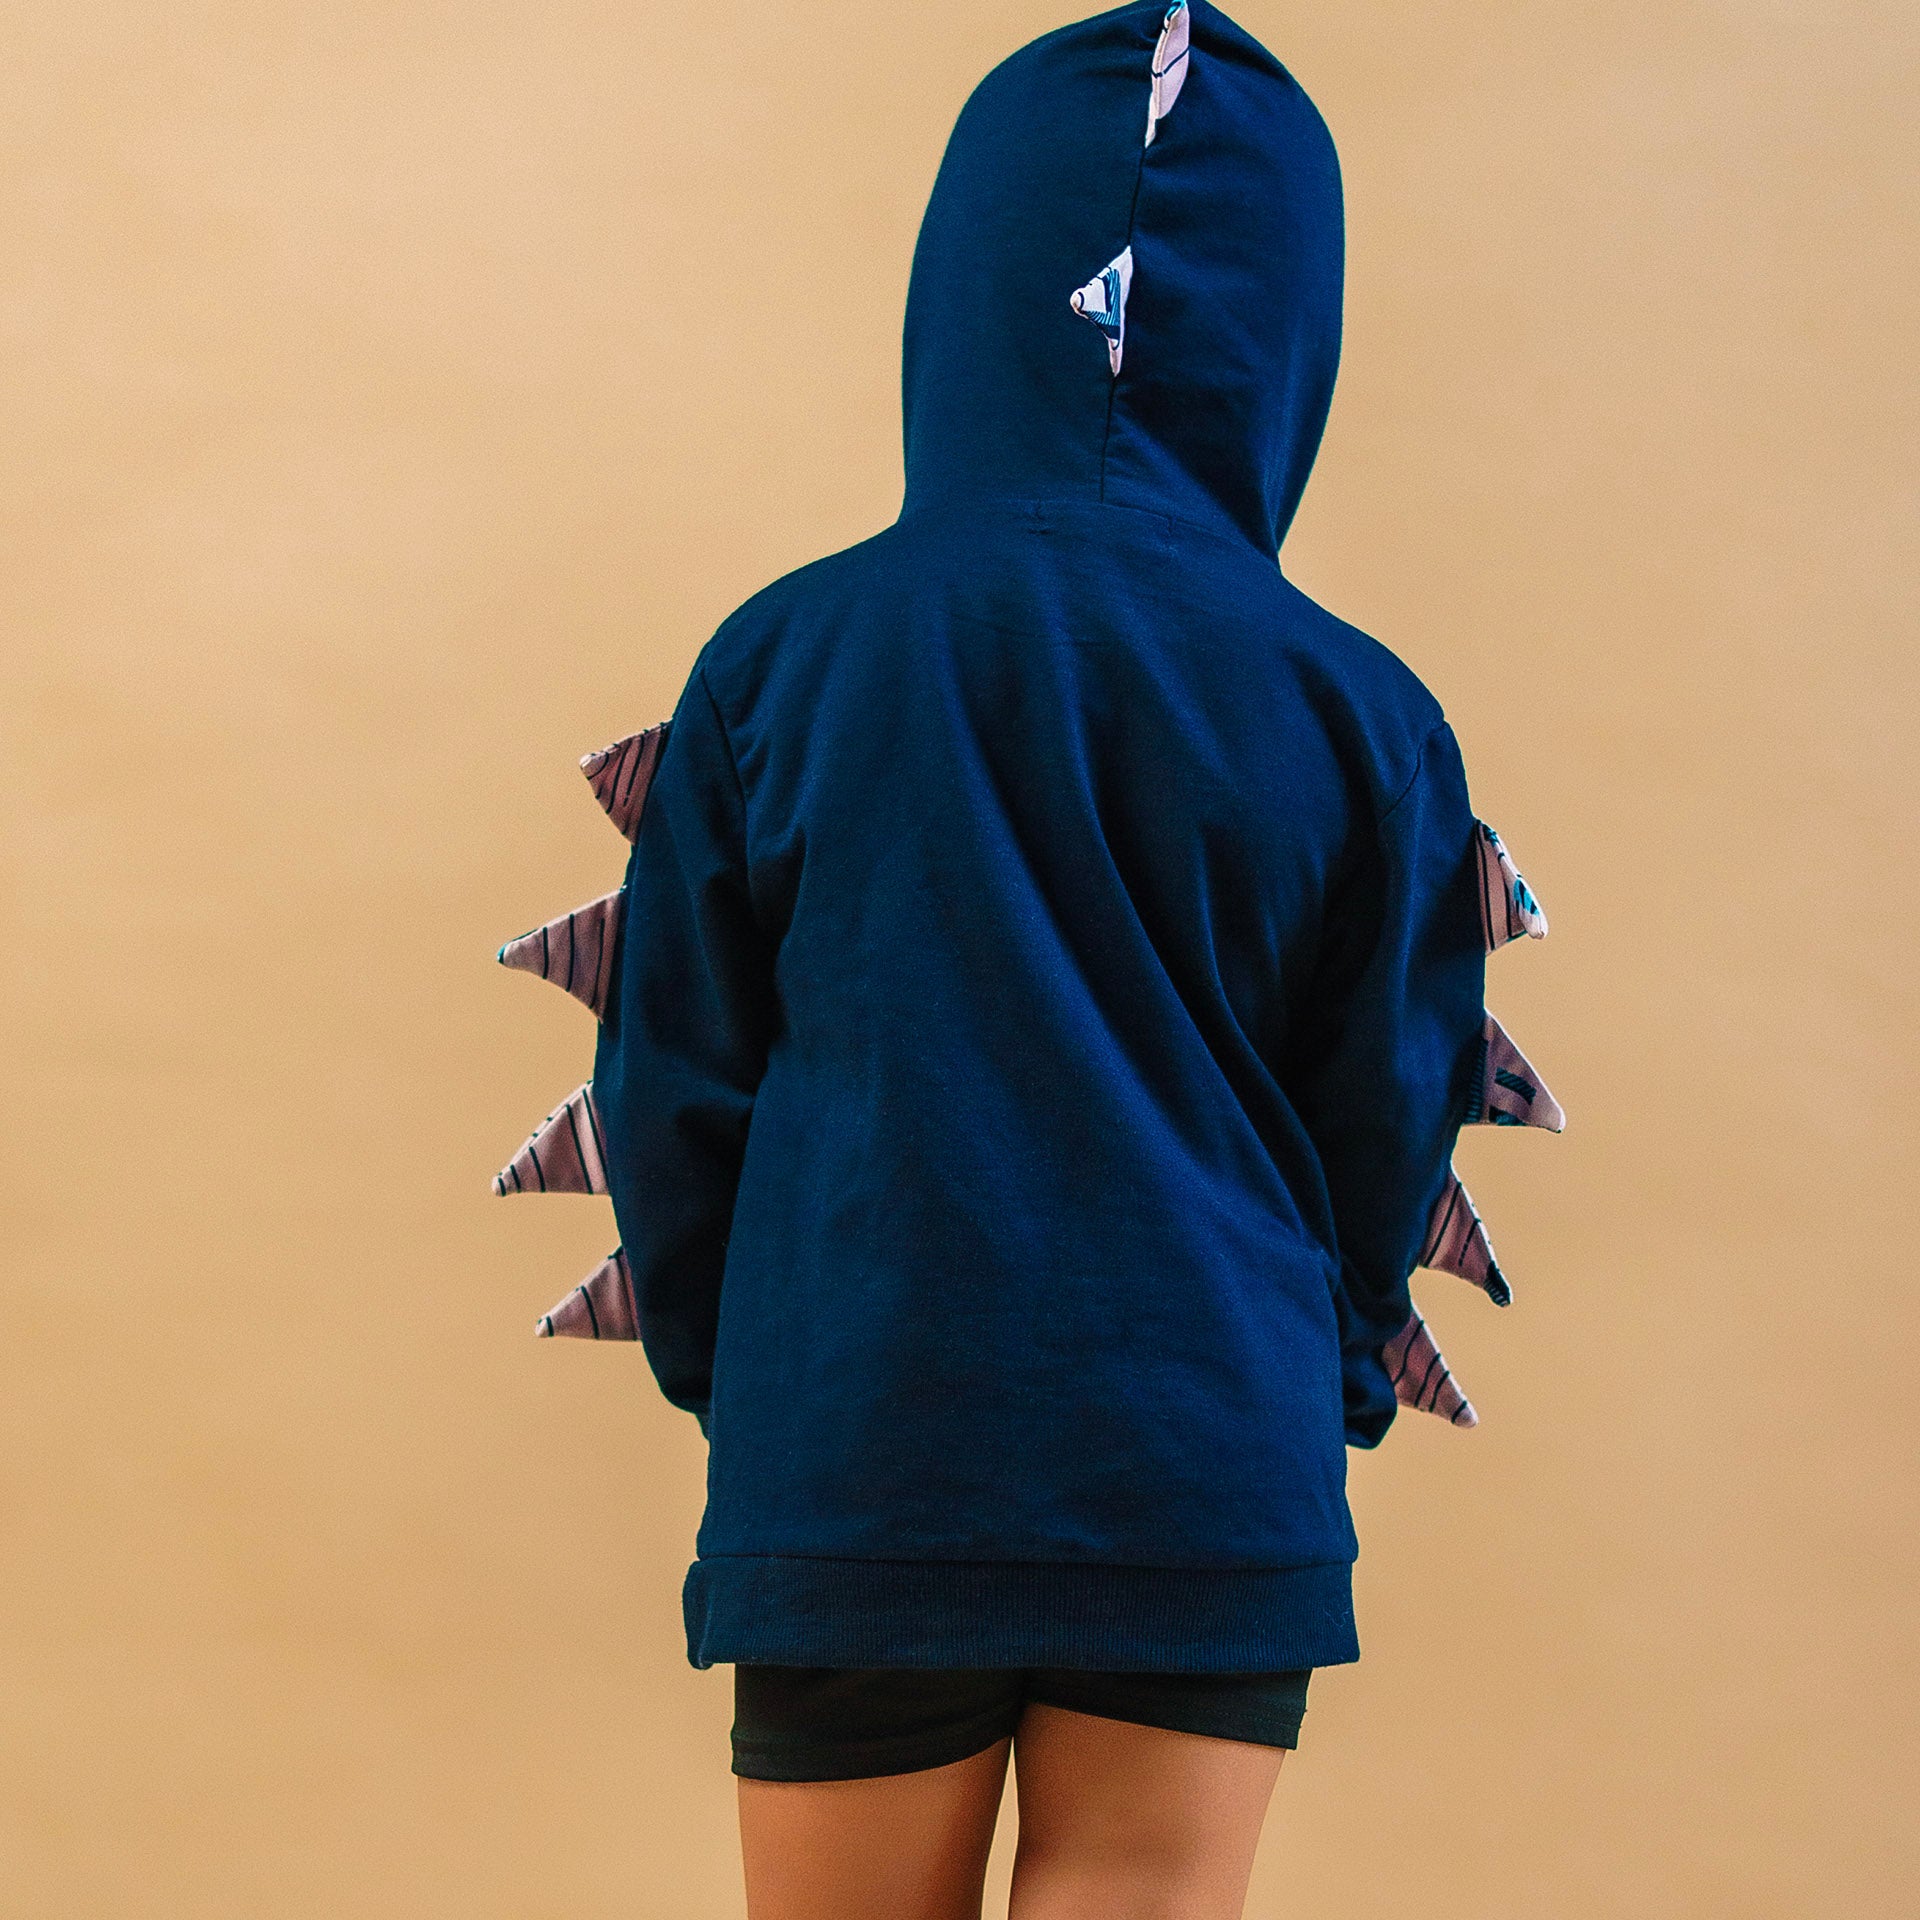 dinosaur hoodie with spikes